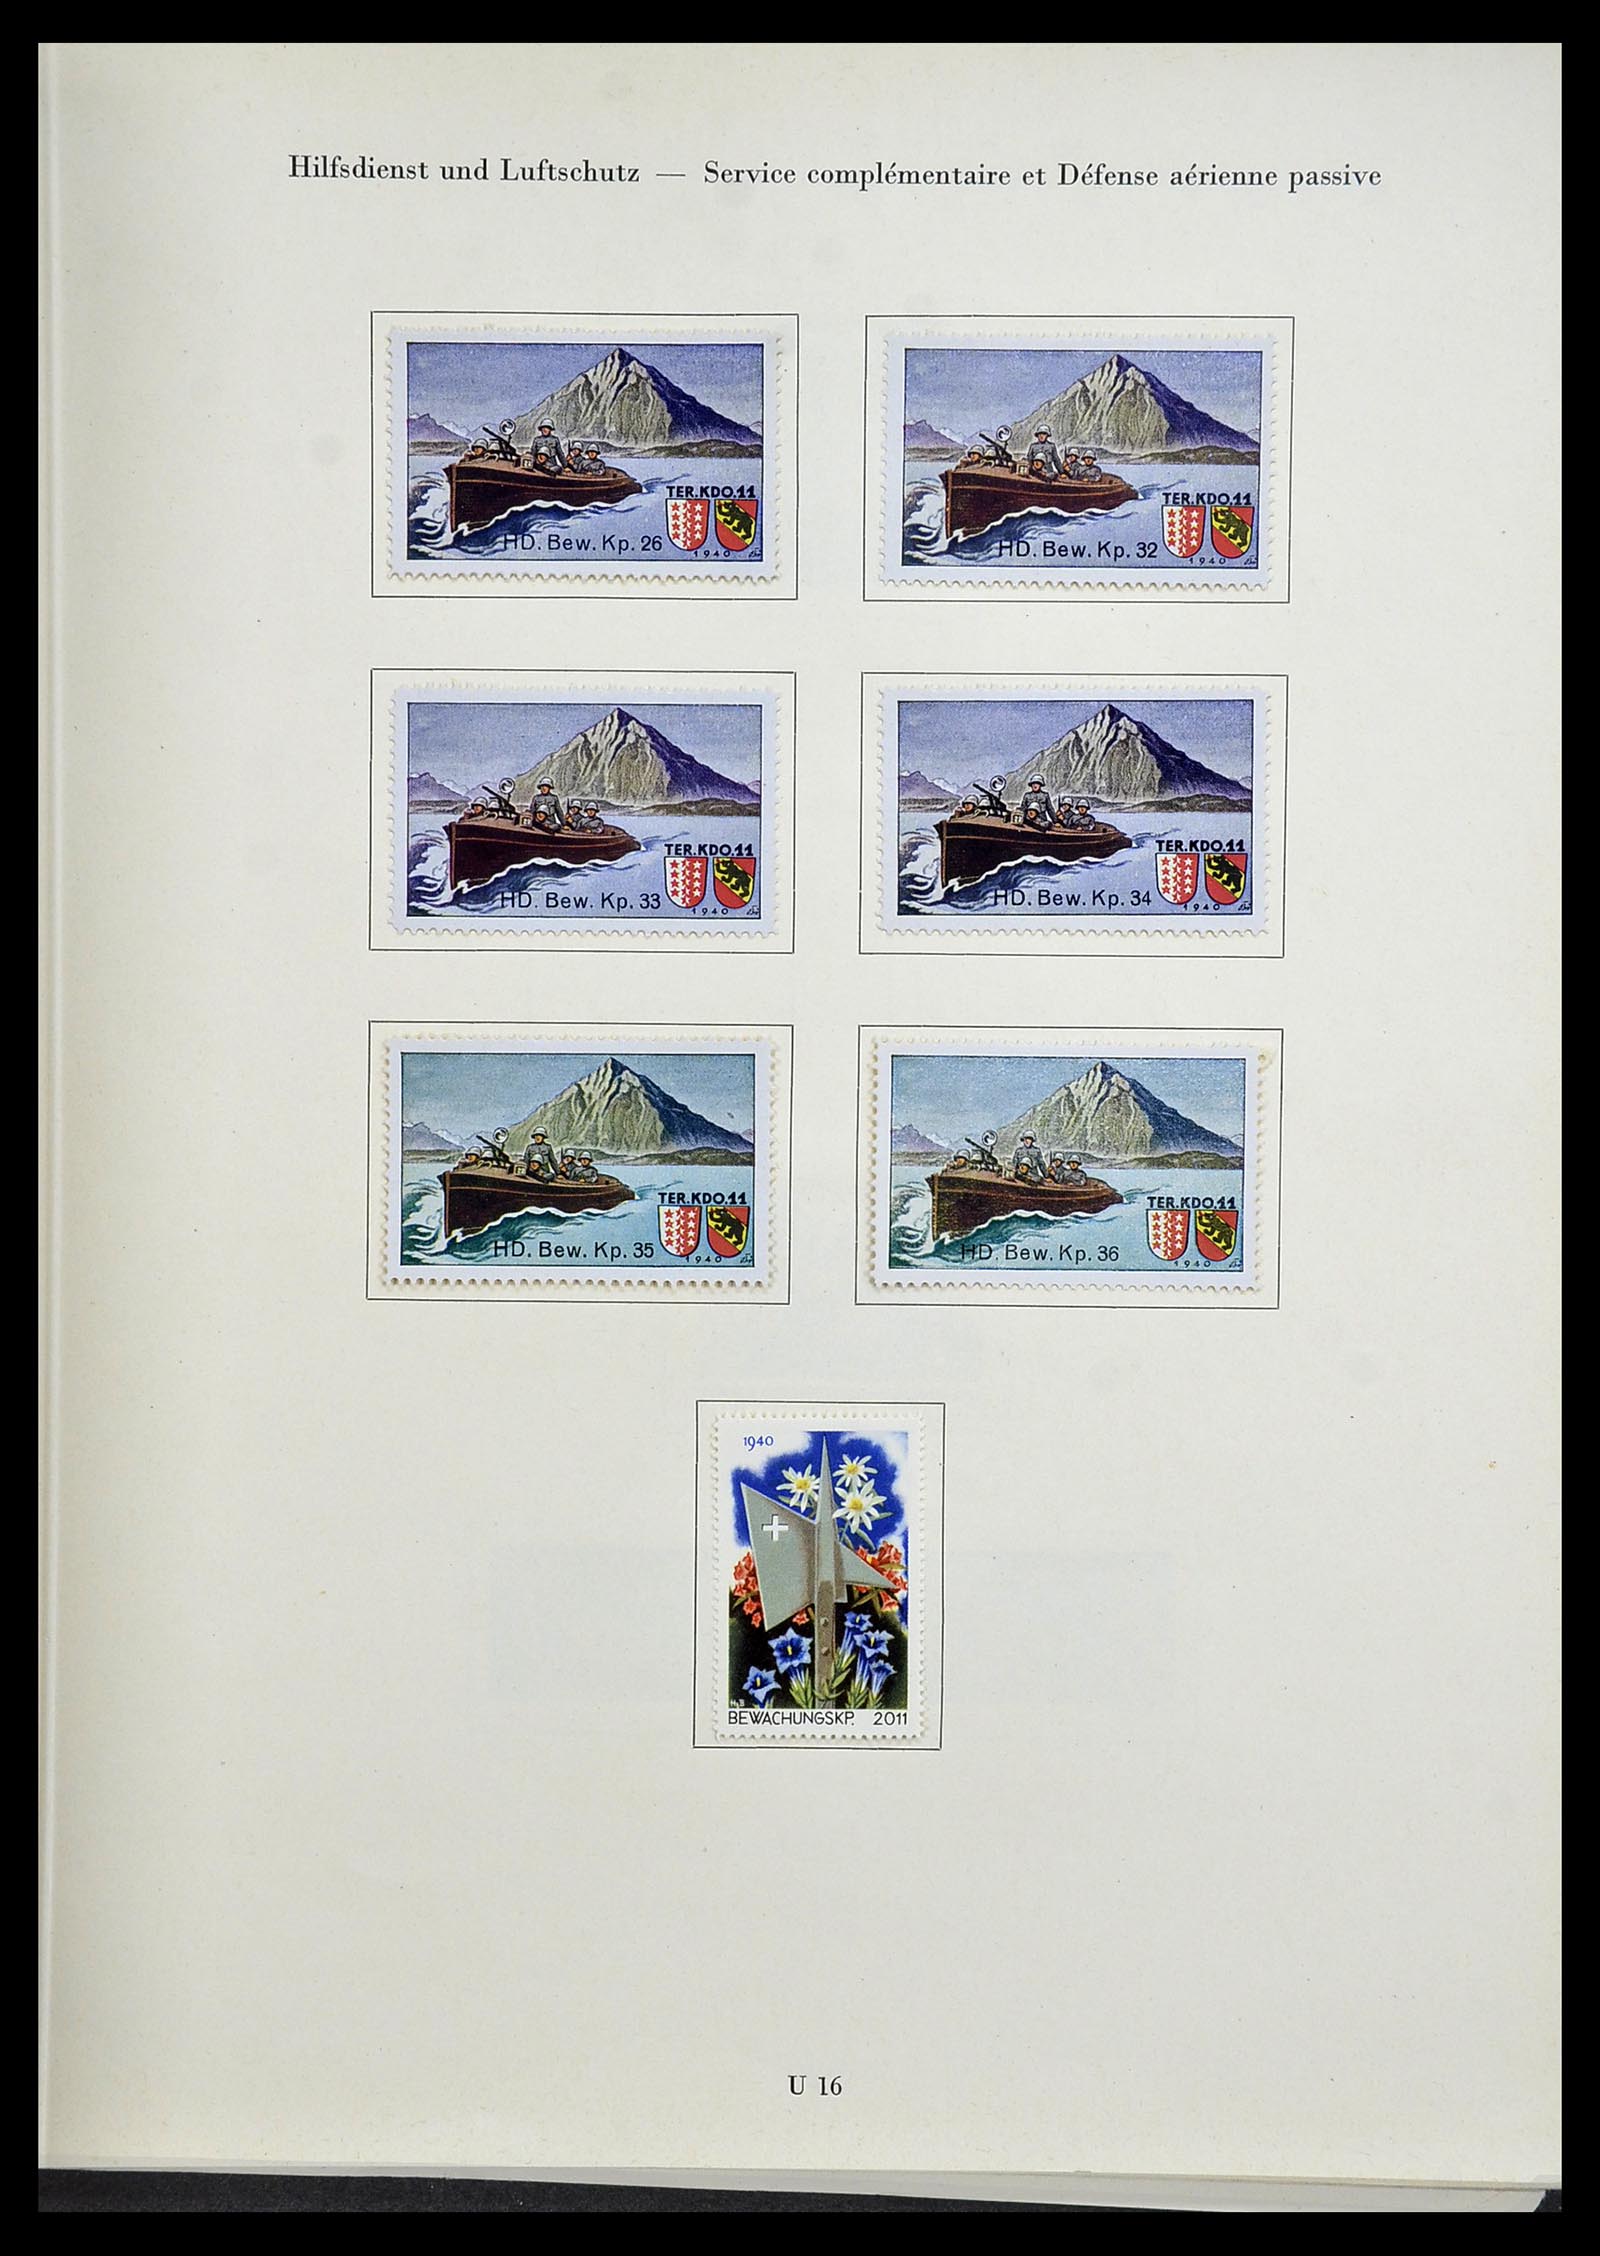 34234 331 - Stamp collection 34234 Switzerland soldier stamps 1939-1945.